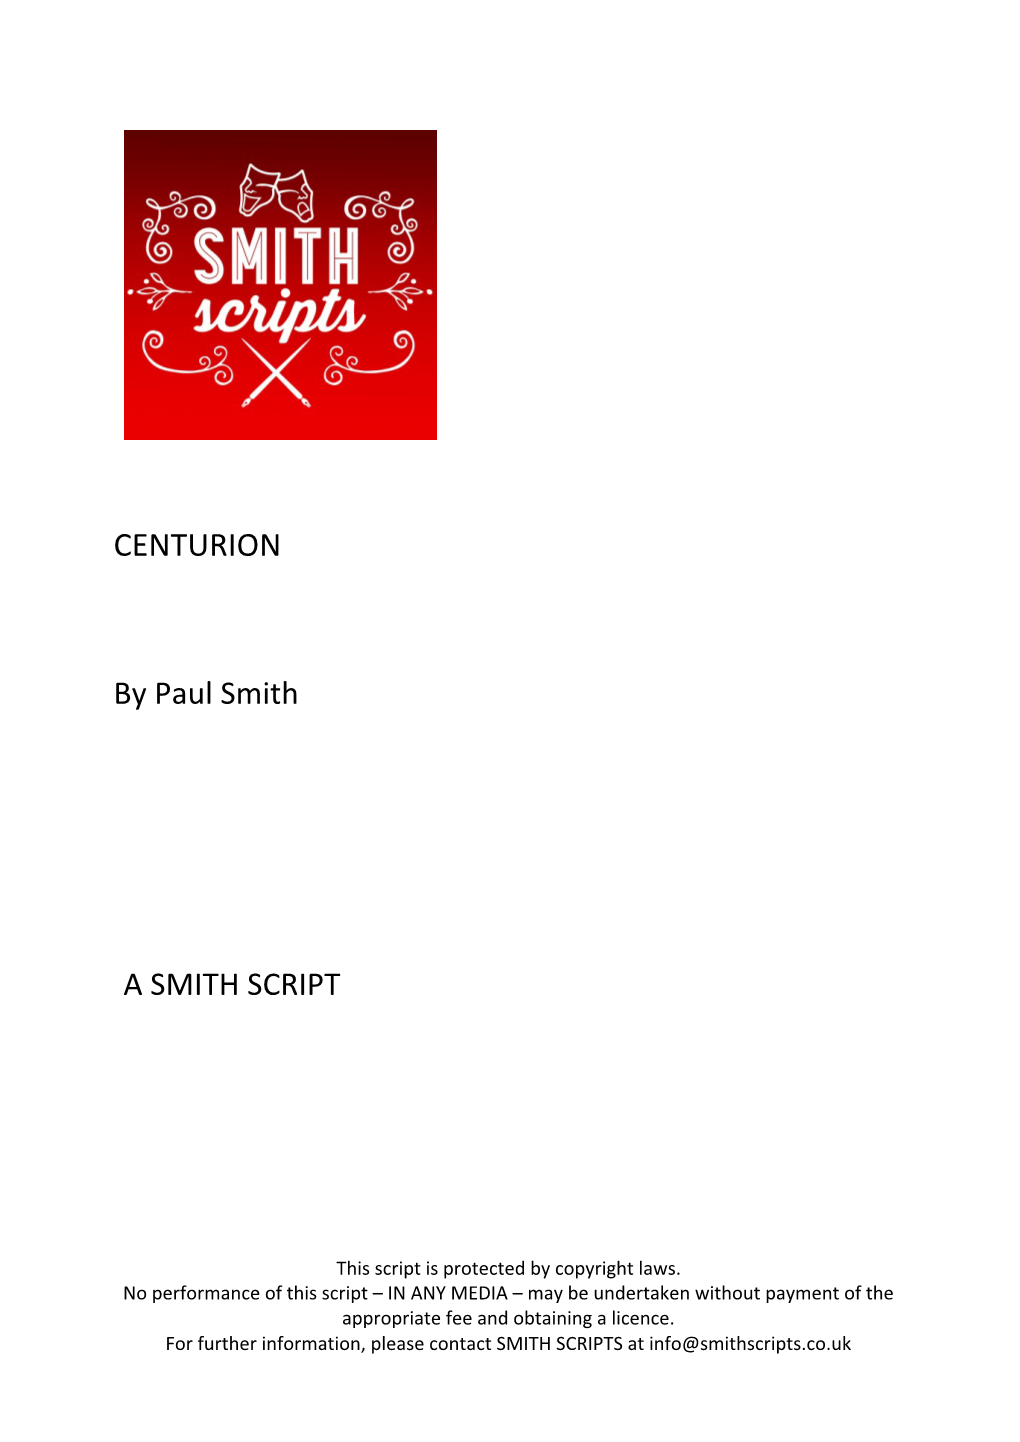 CENTURION by Paul Smith a SMITH SCRIPT